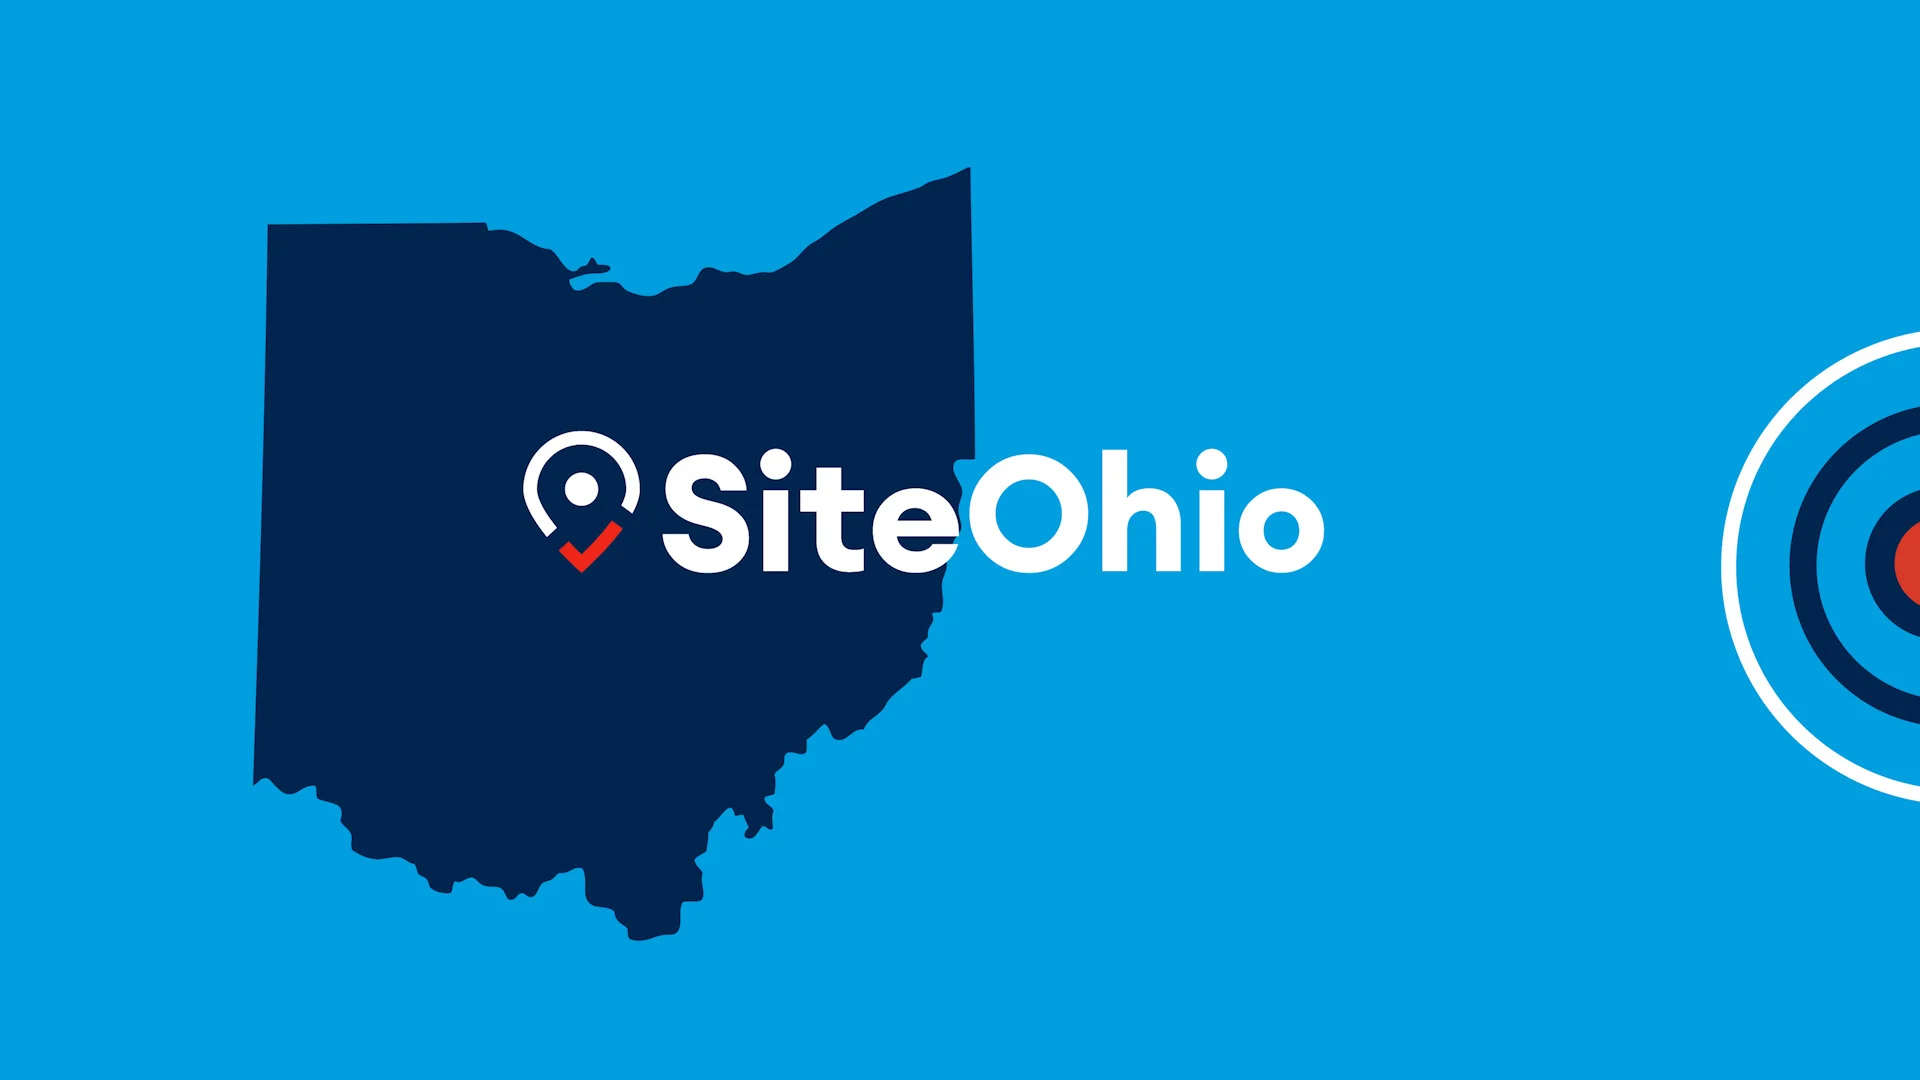 SiteOhio logo over the state of Ohio